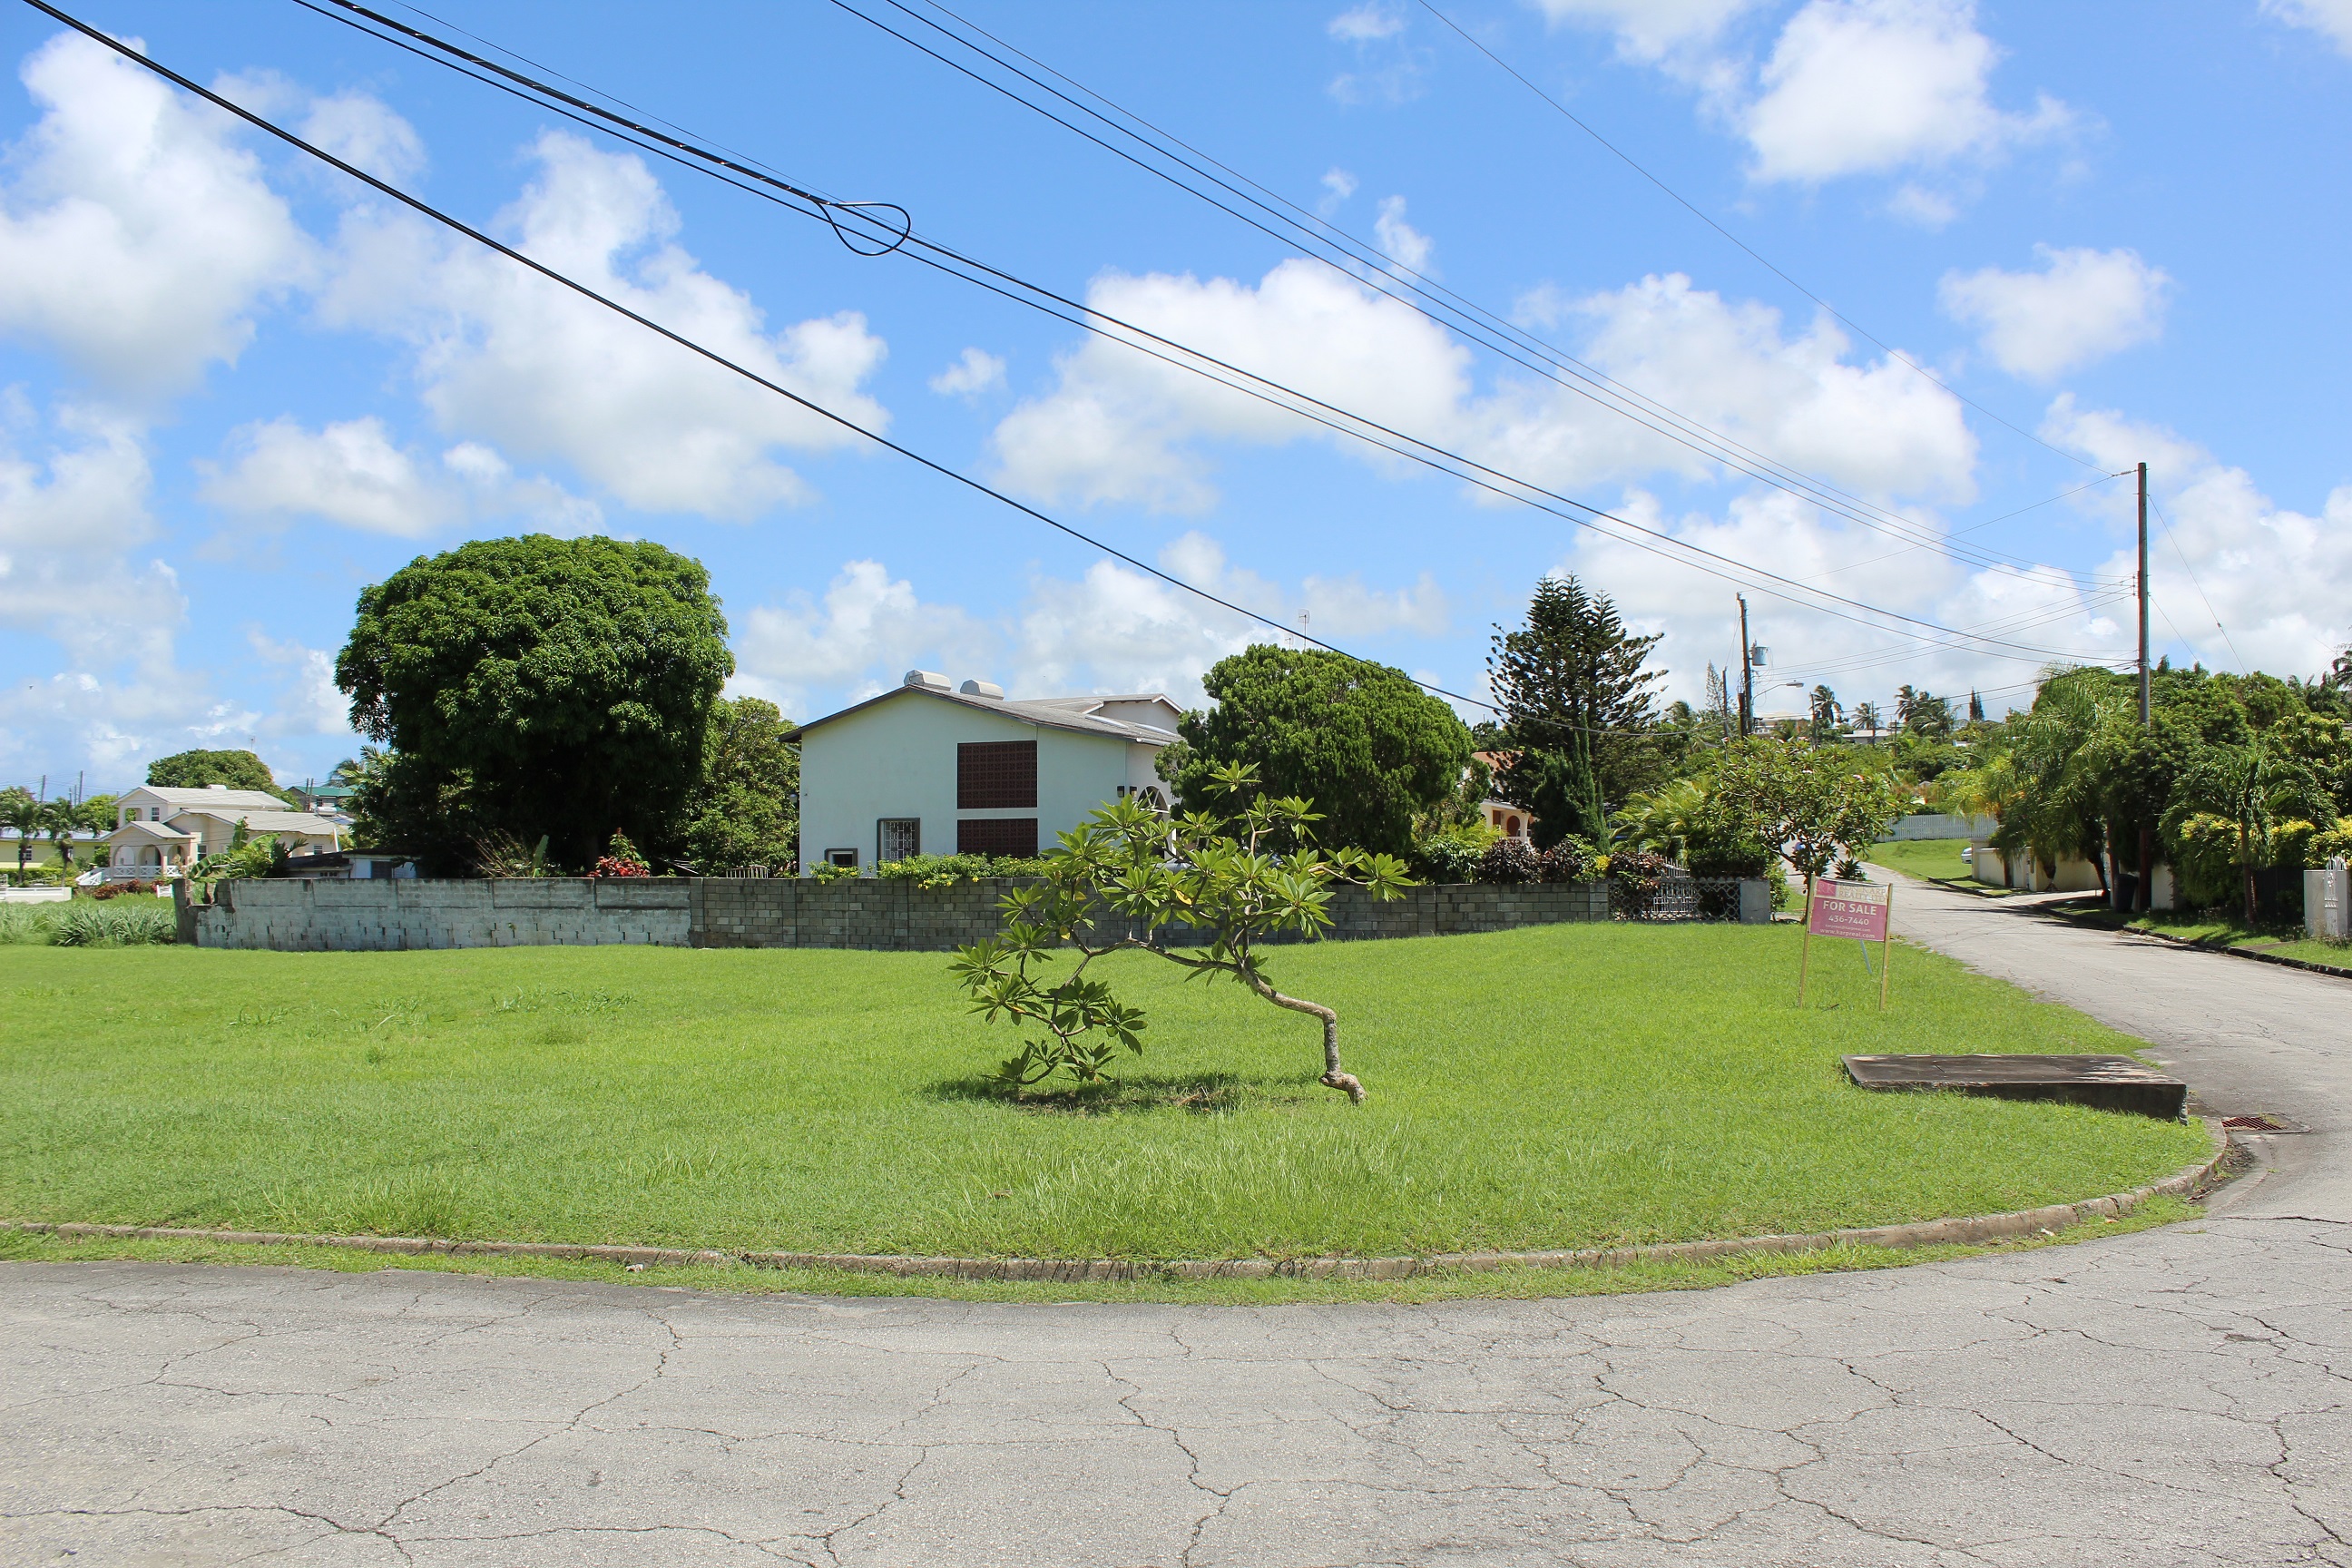 Durants Development, Lot 44A, Christ Church Barbados